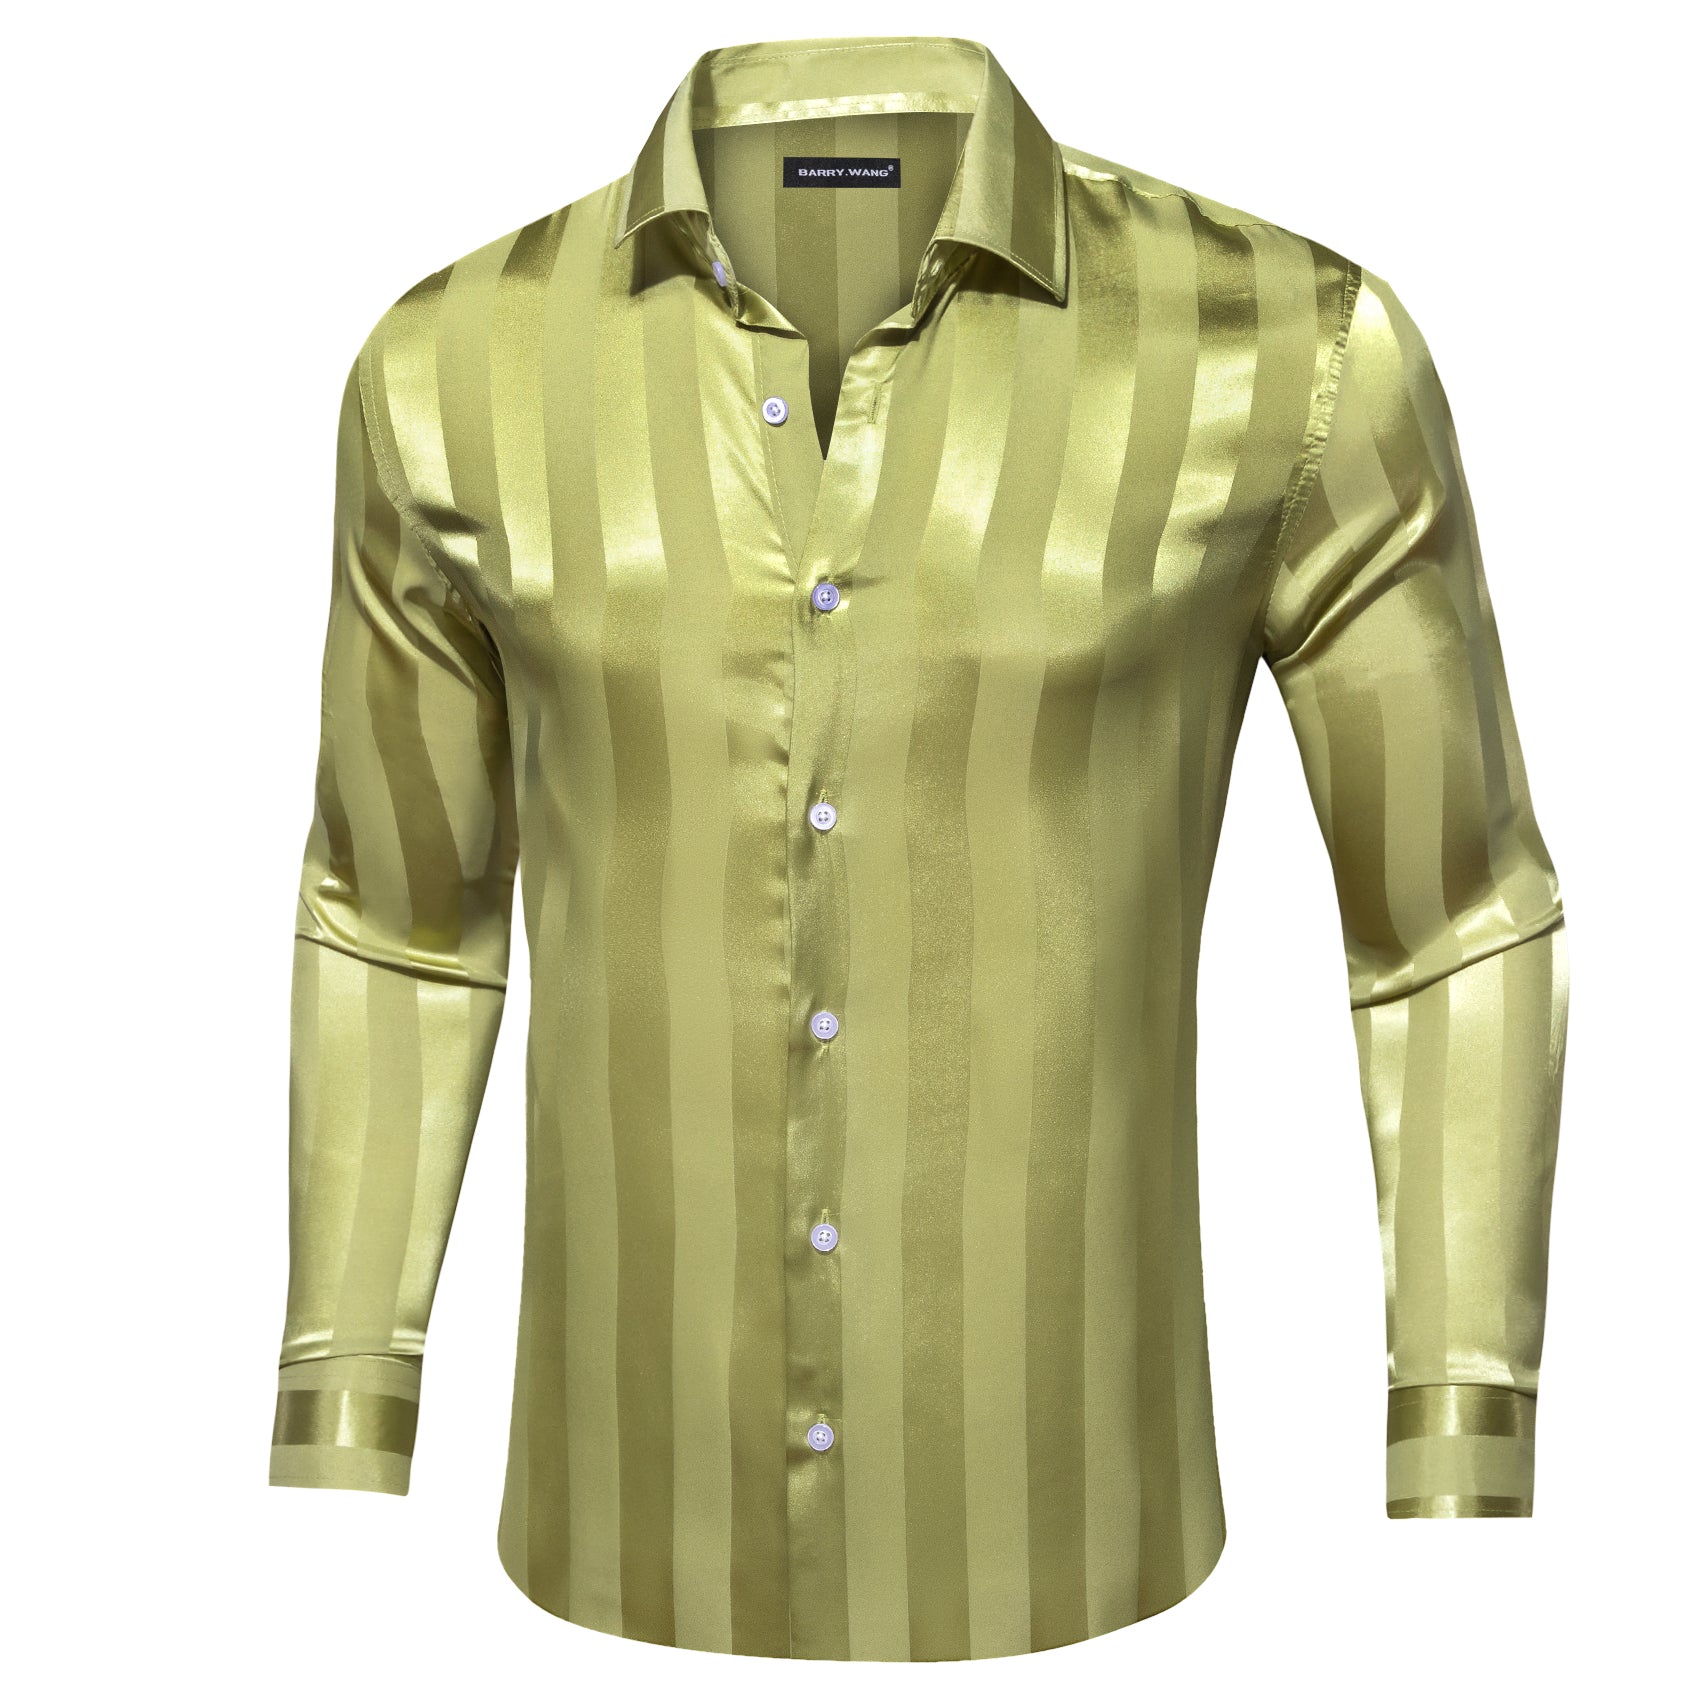 Barry.wang Yellow Green Striped Silk Men's Shirt